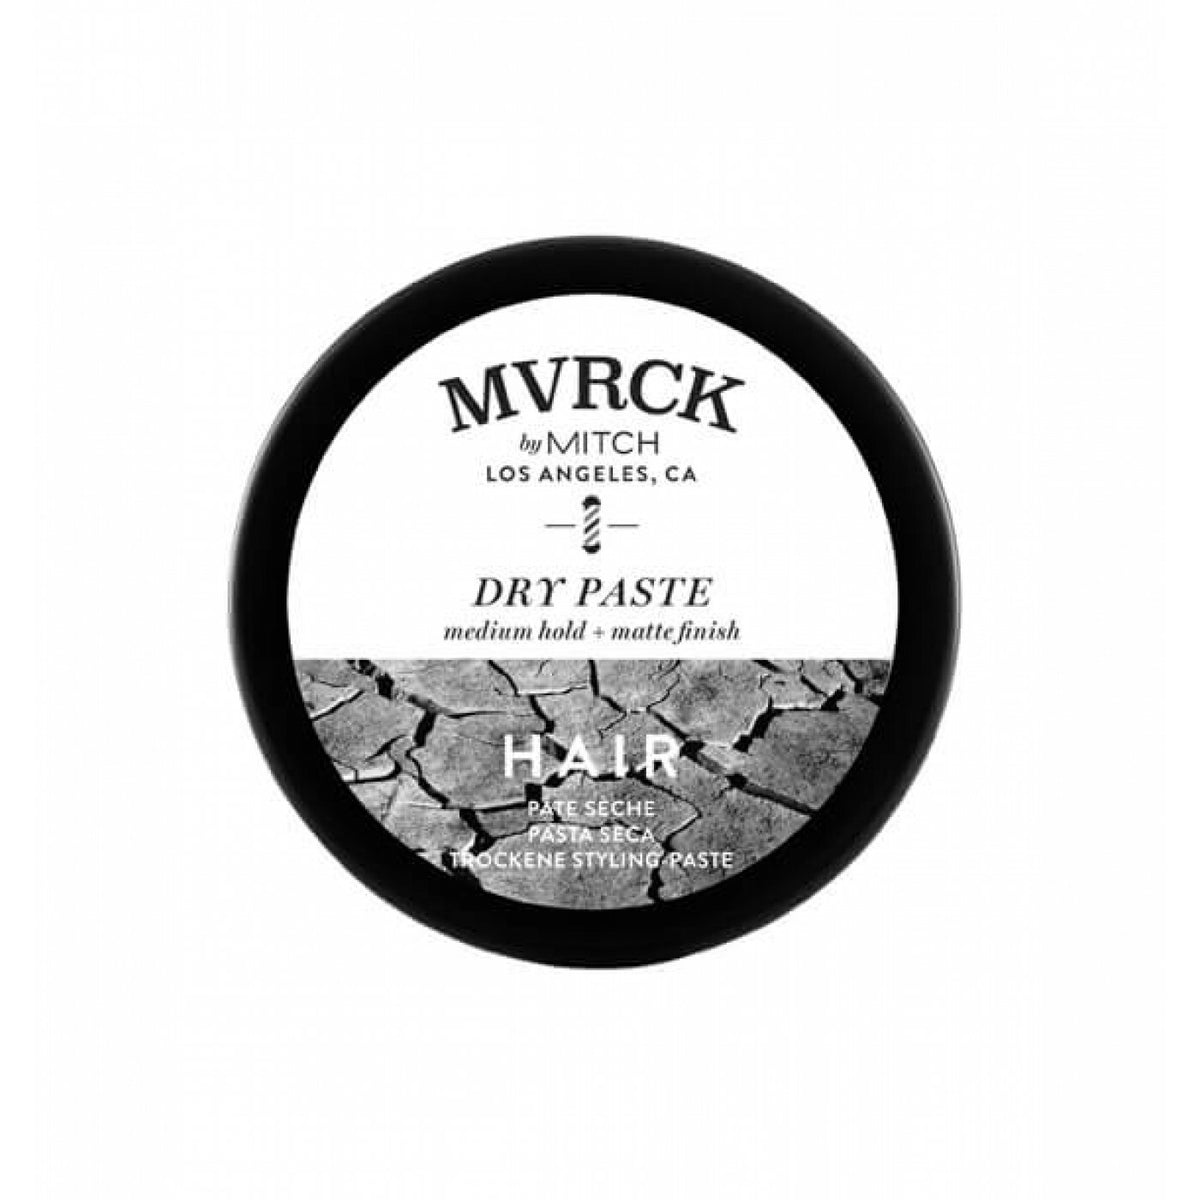 MVRCK by MITCH - Dry Paste 113g